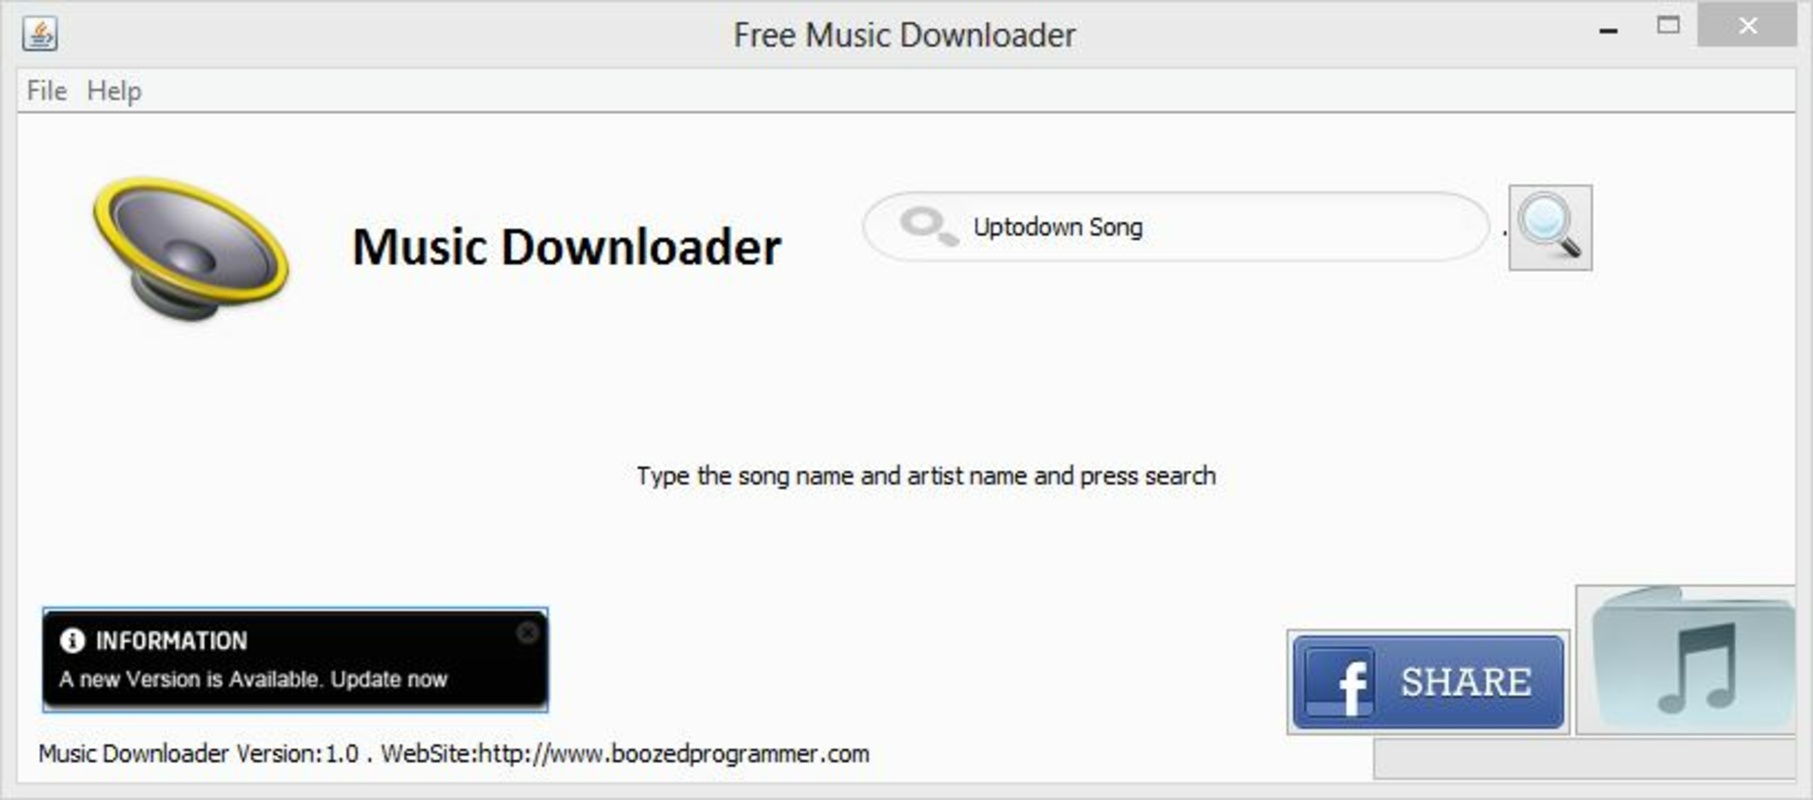 Free Music Downloader 1.0.0.4 for Windows Screenshot 1